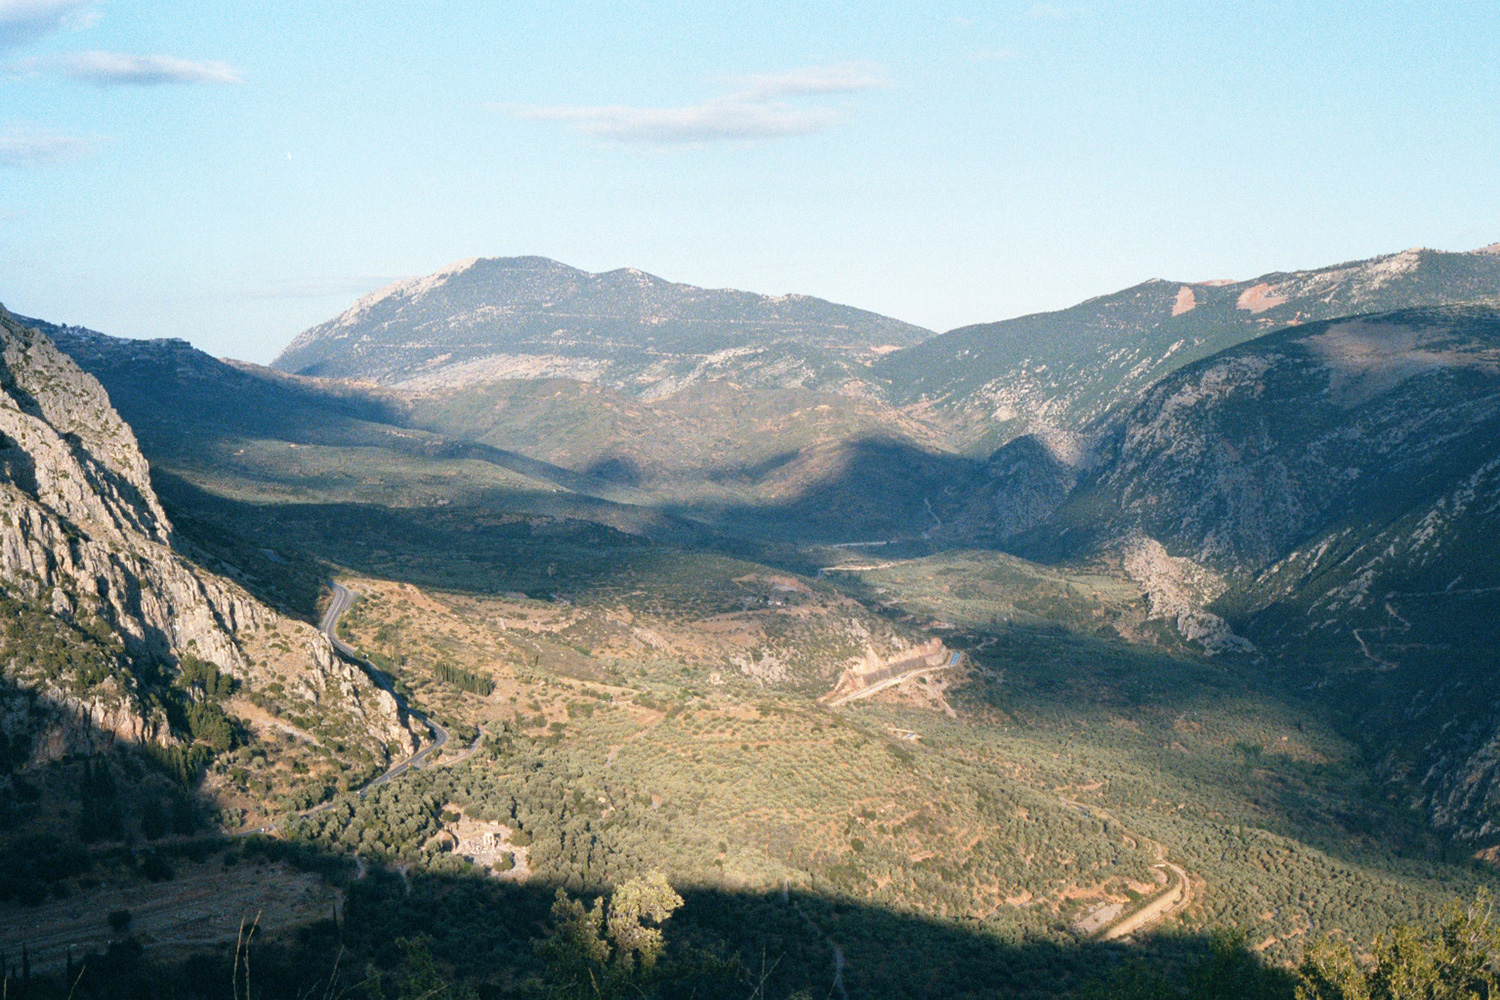 A view above Delphi